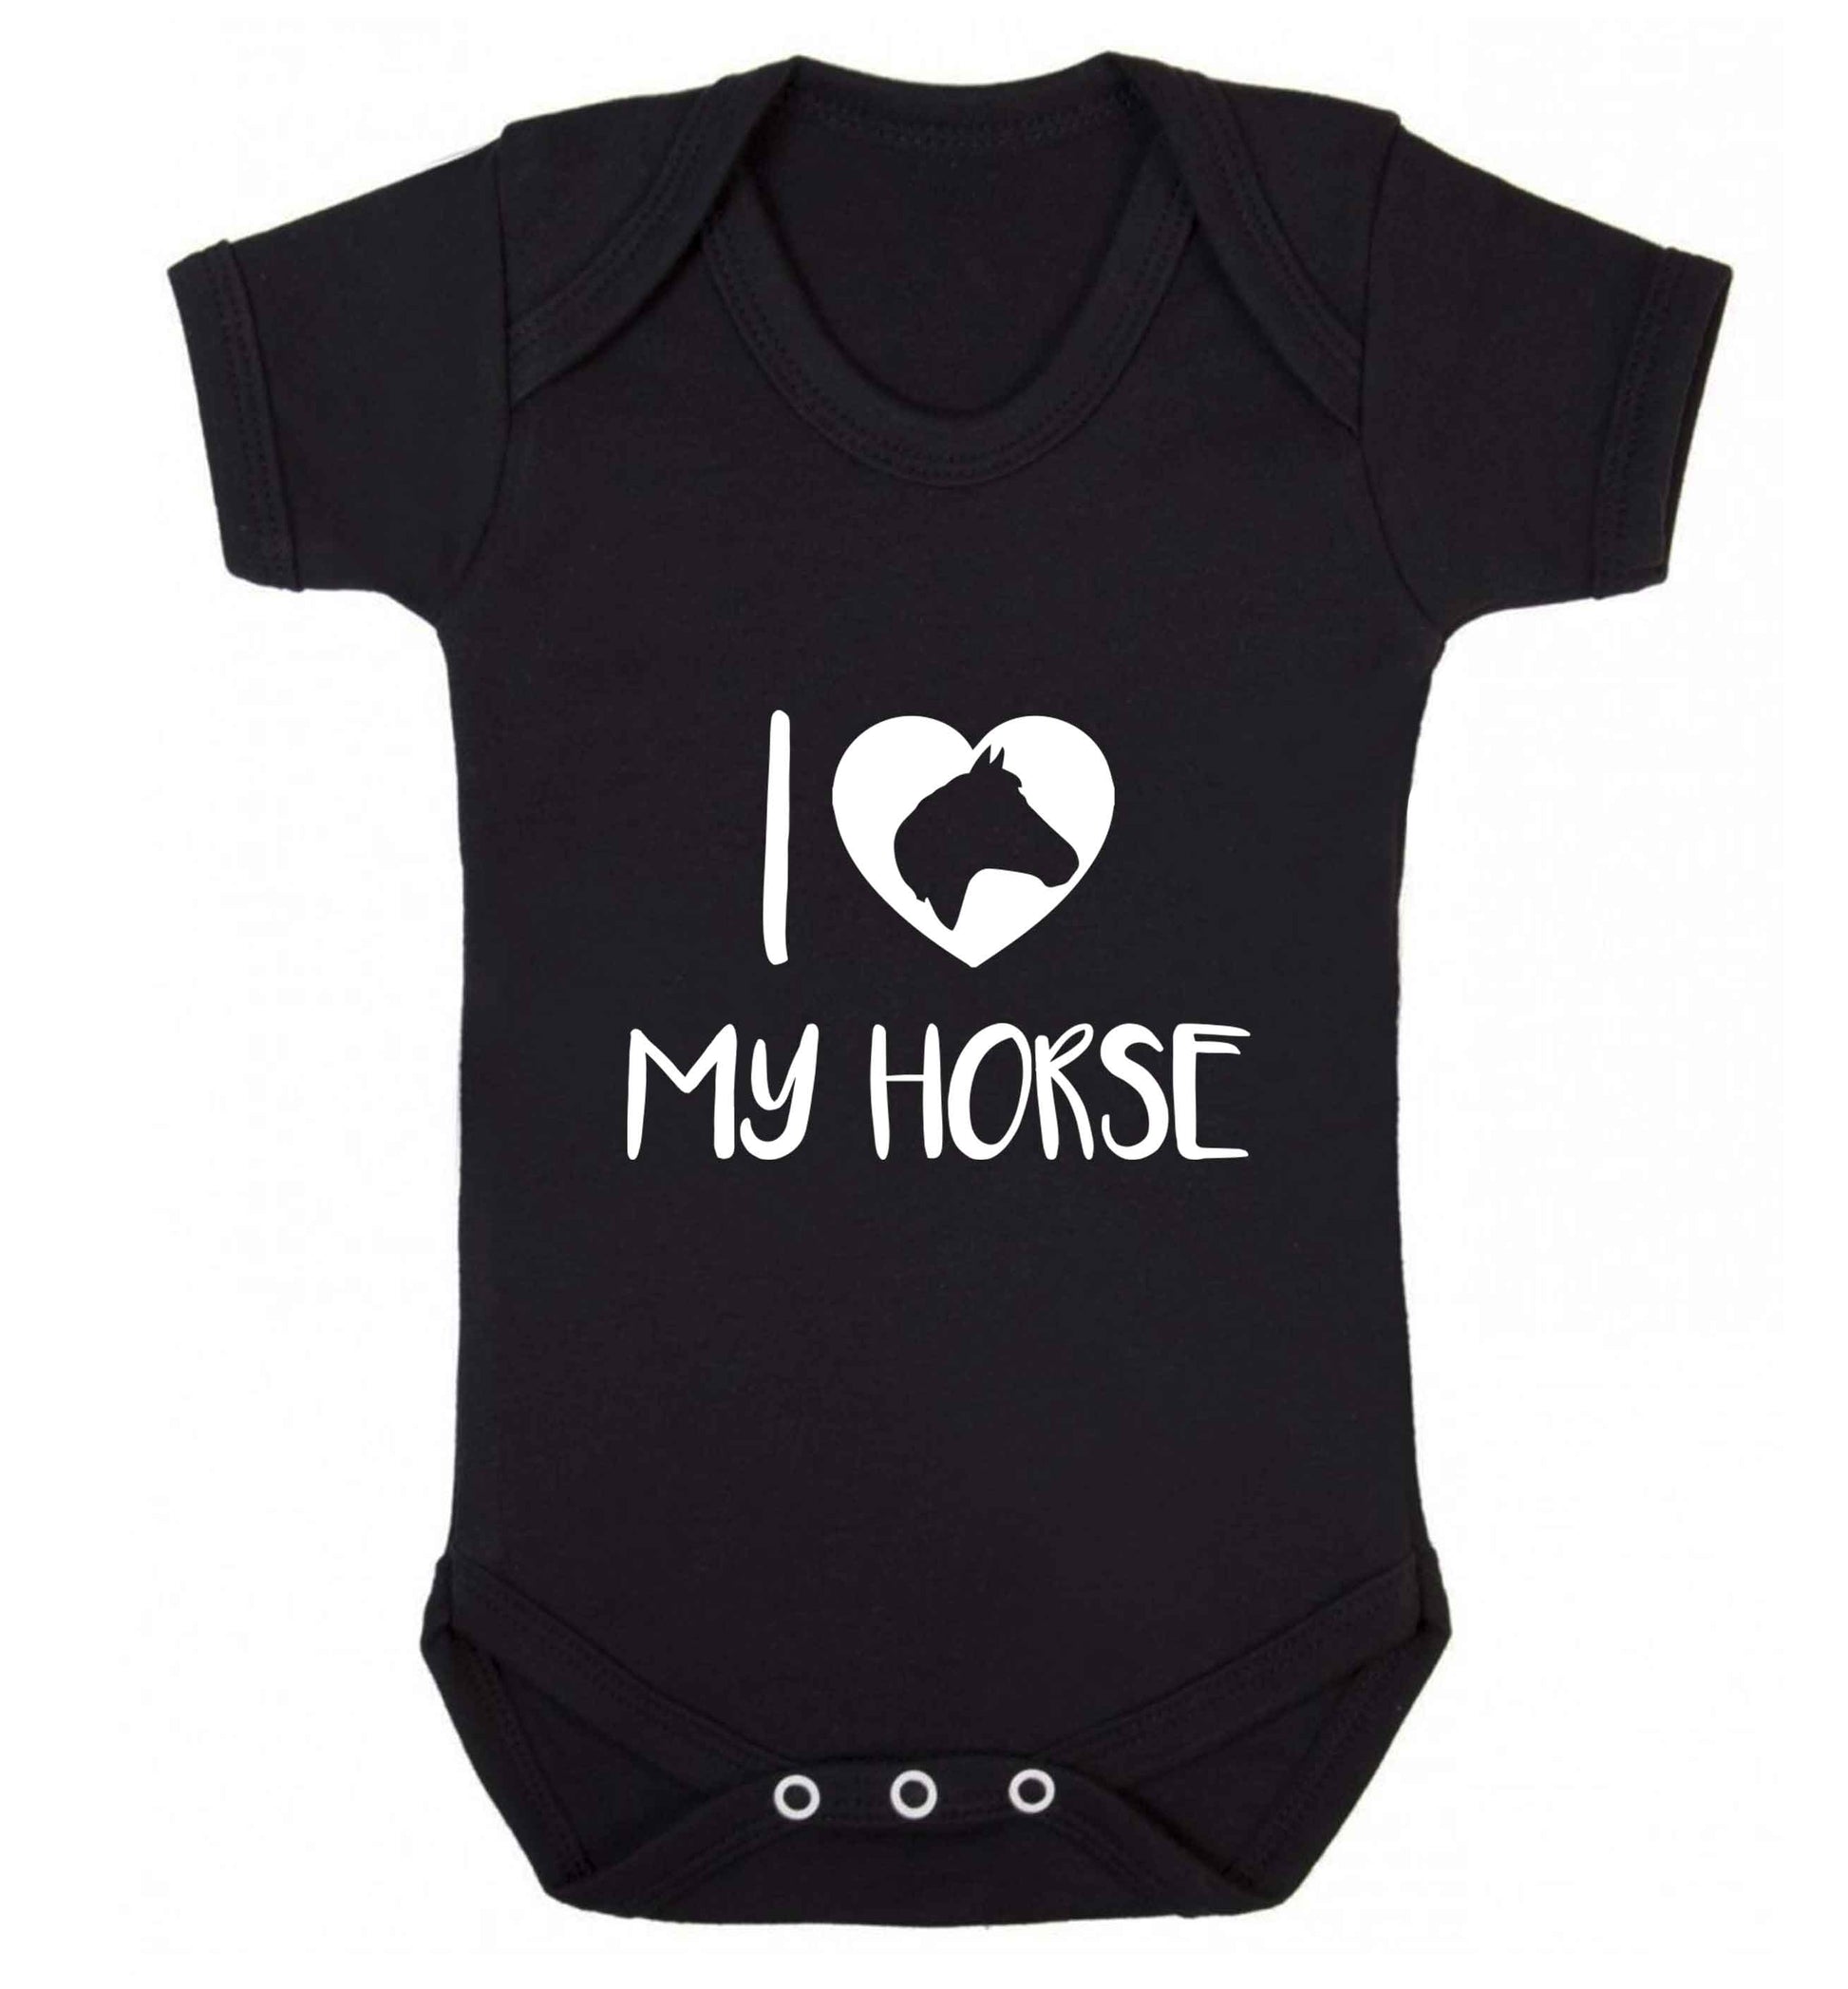 I love my horse baby vest black 18-24 months